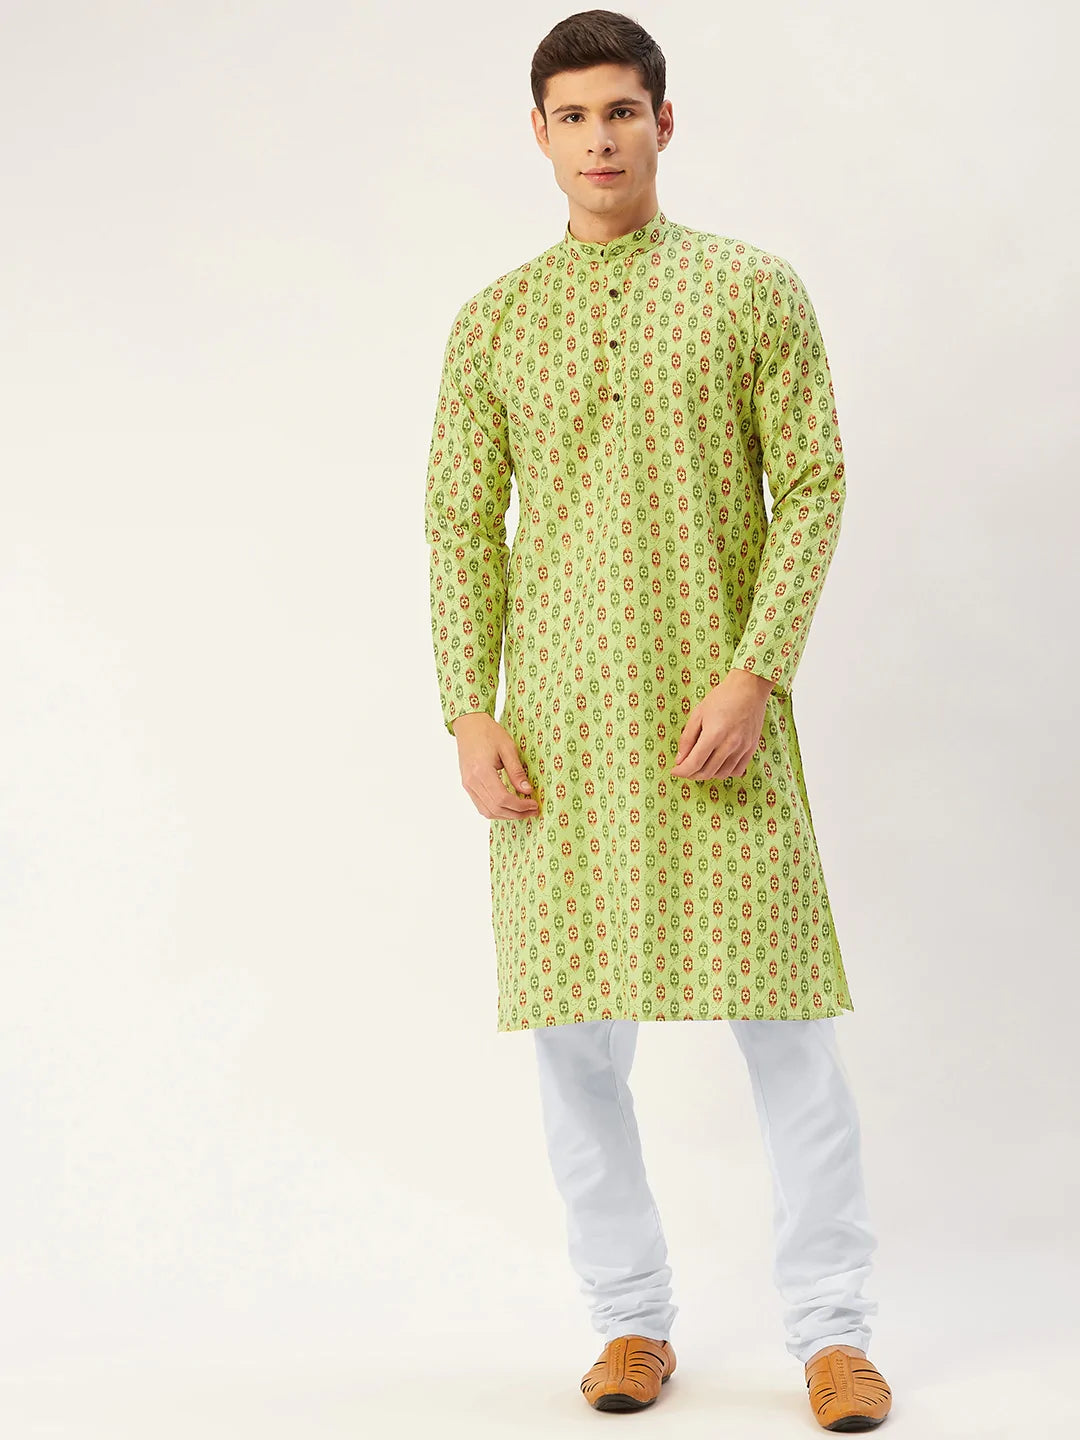 Jompers Men's Green Cotton Ikat printed kurta Pyjama Set ( JOKP 651 Green )